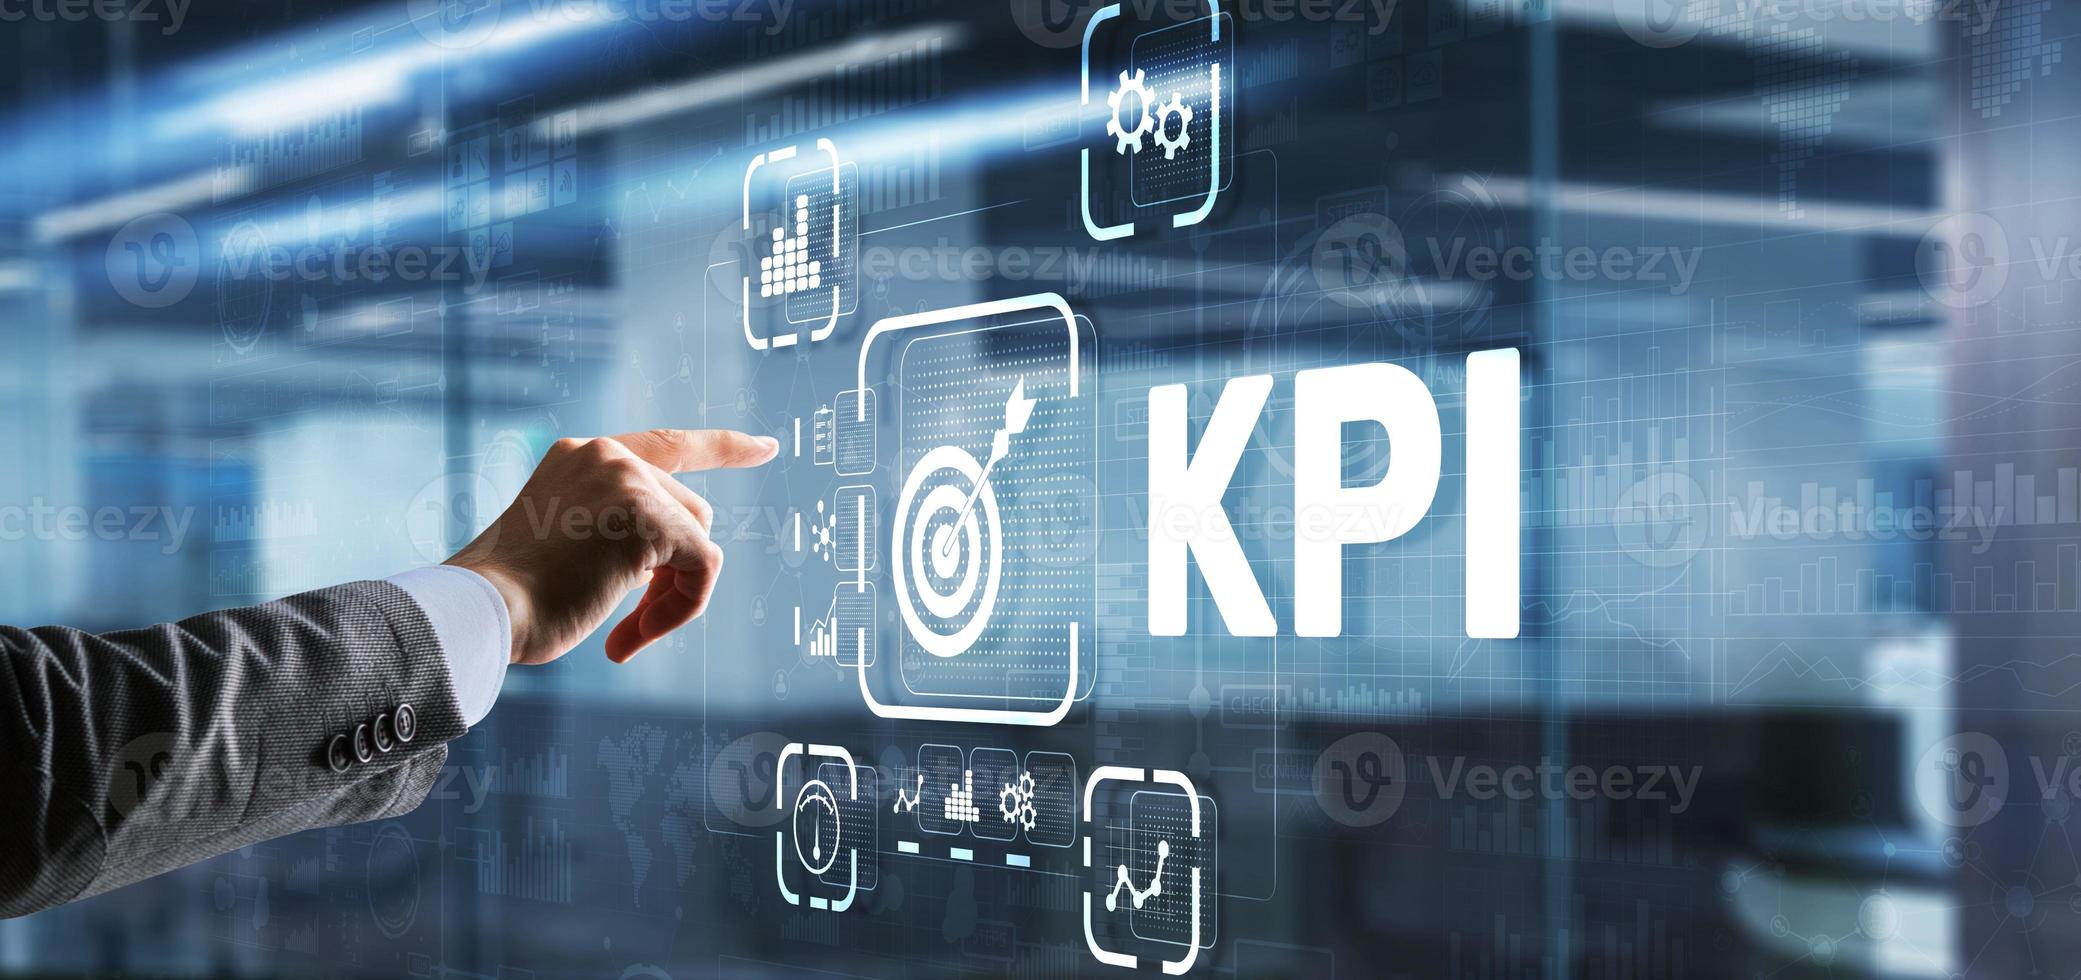 kpi key performance indicator business internet technology concept on virtual screen foto